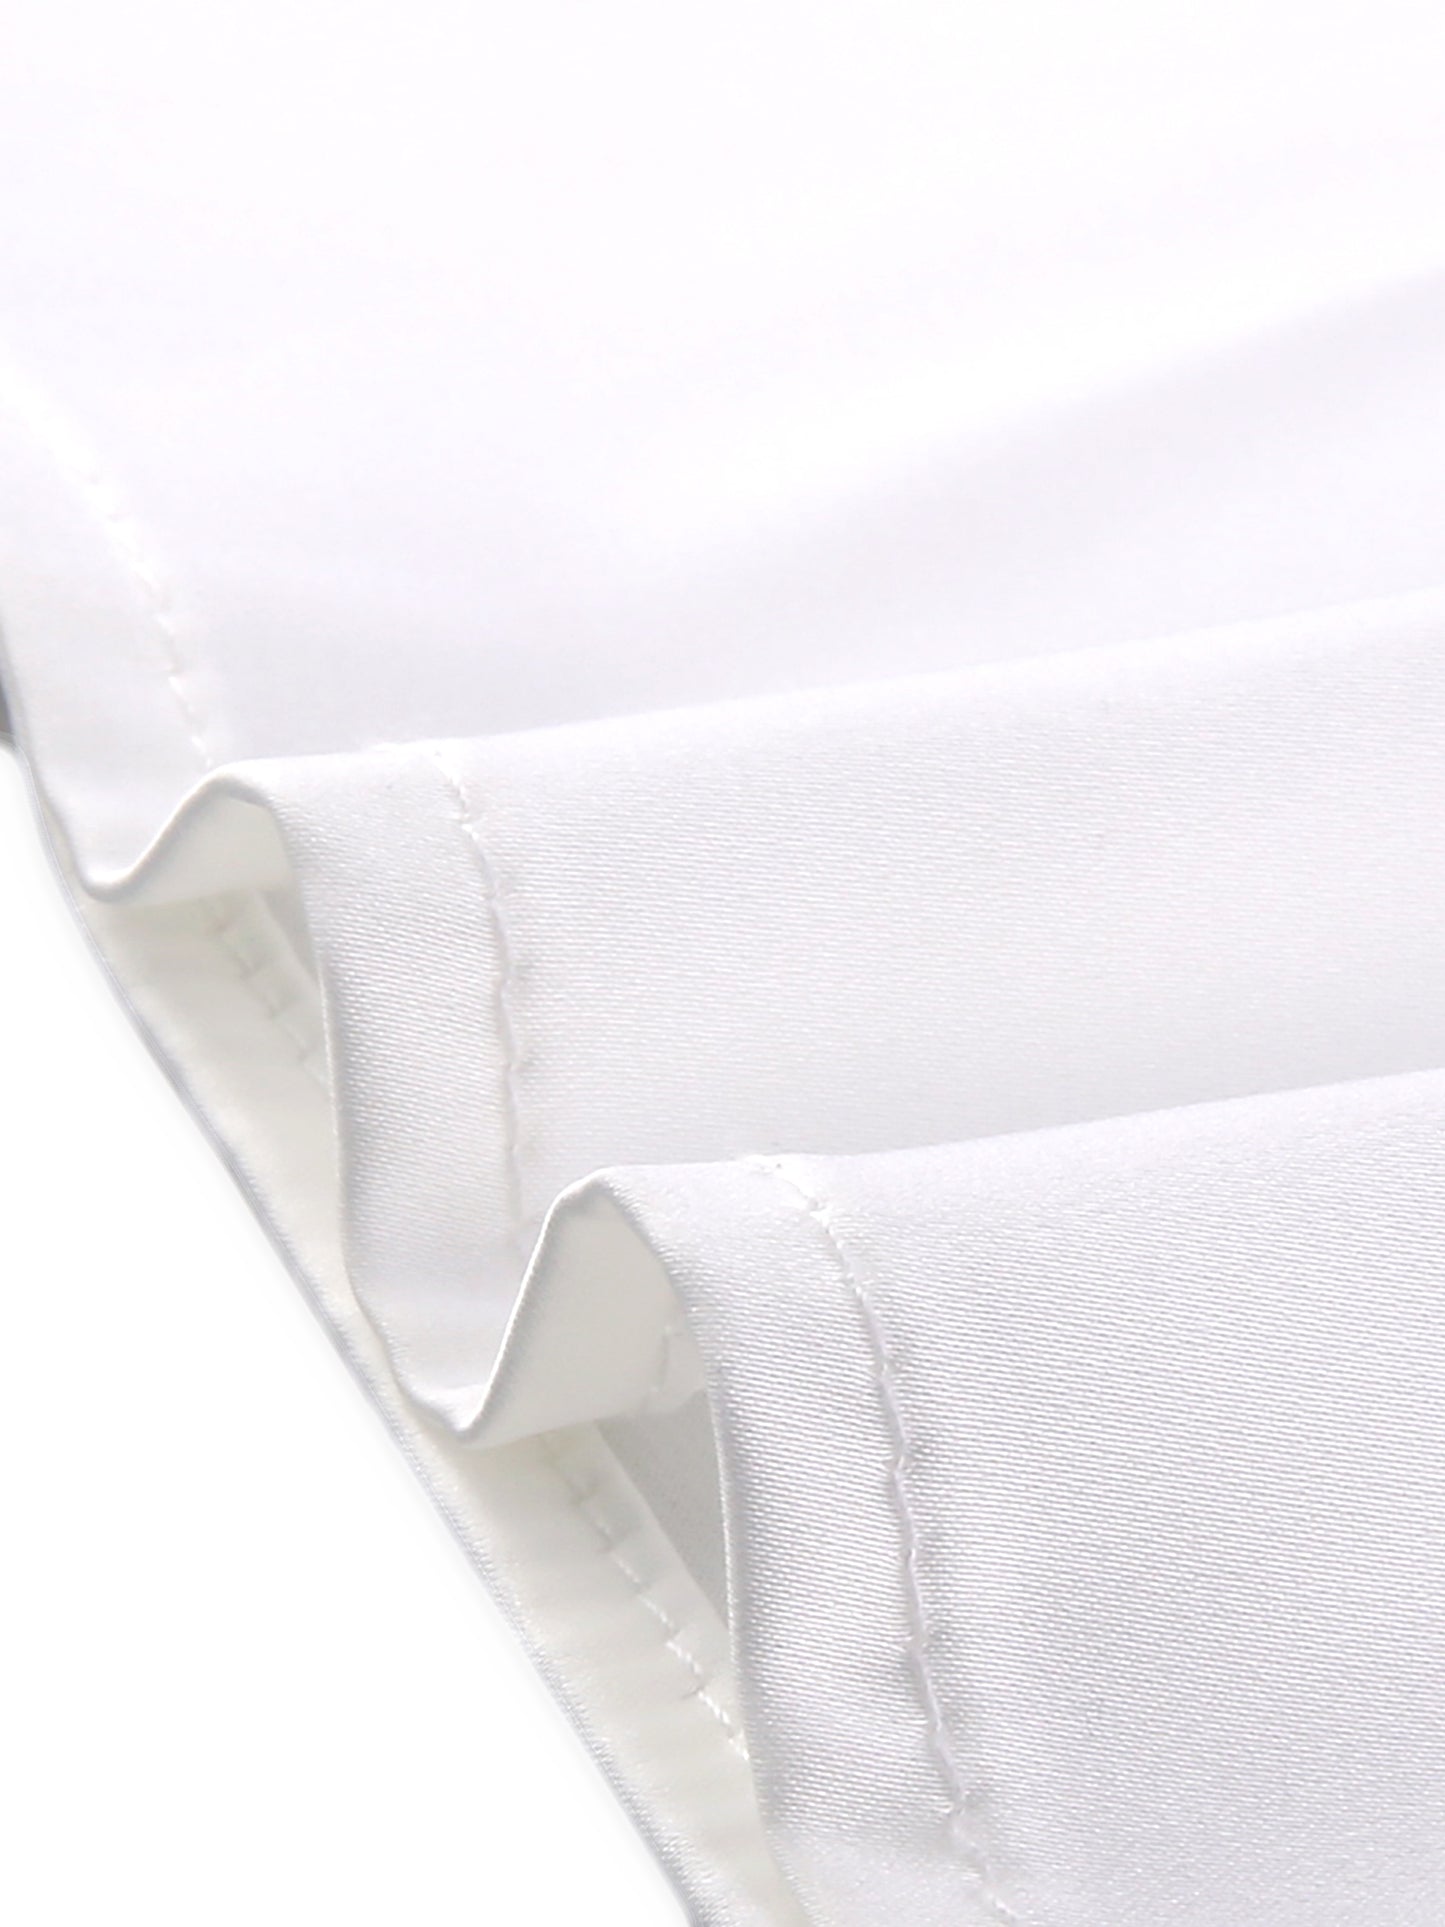 cheibear Satin Cami Silky Strap Top Lounge Pajama Camisole White